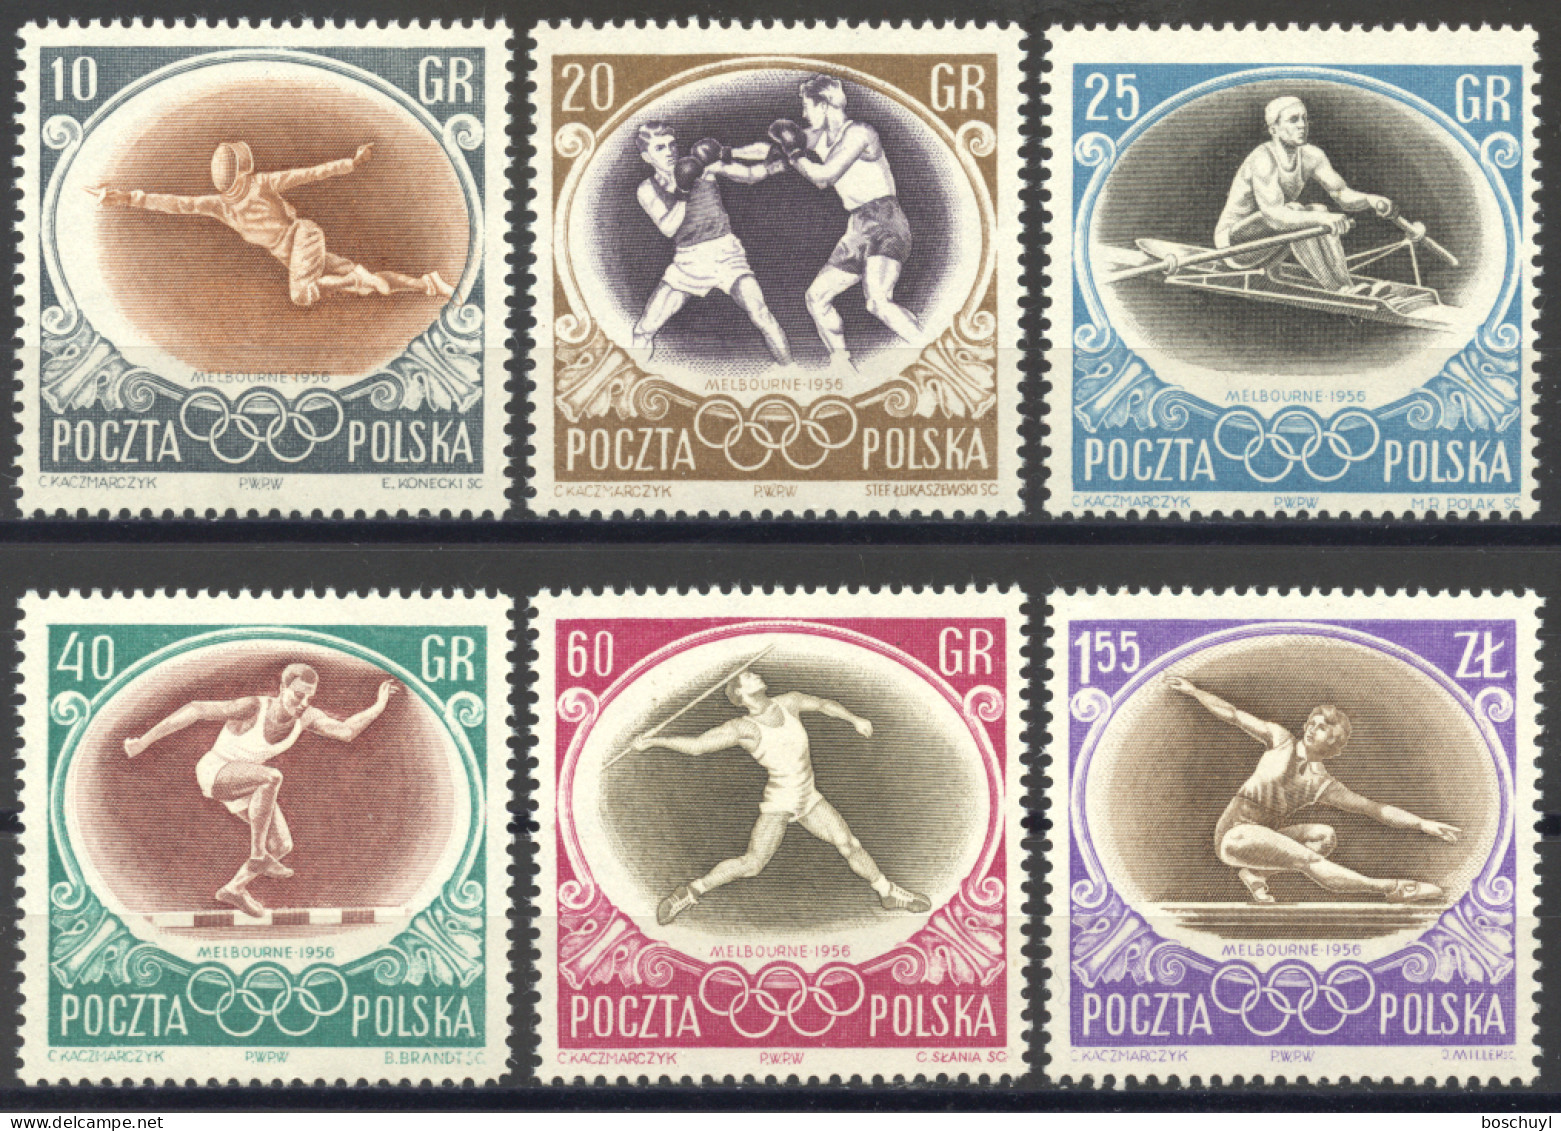 Poland, 1956, Olympic Summer Games Melbourne, Sports, MNH, Michel 984-989 - Ongebruikt